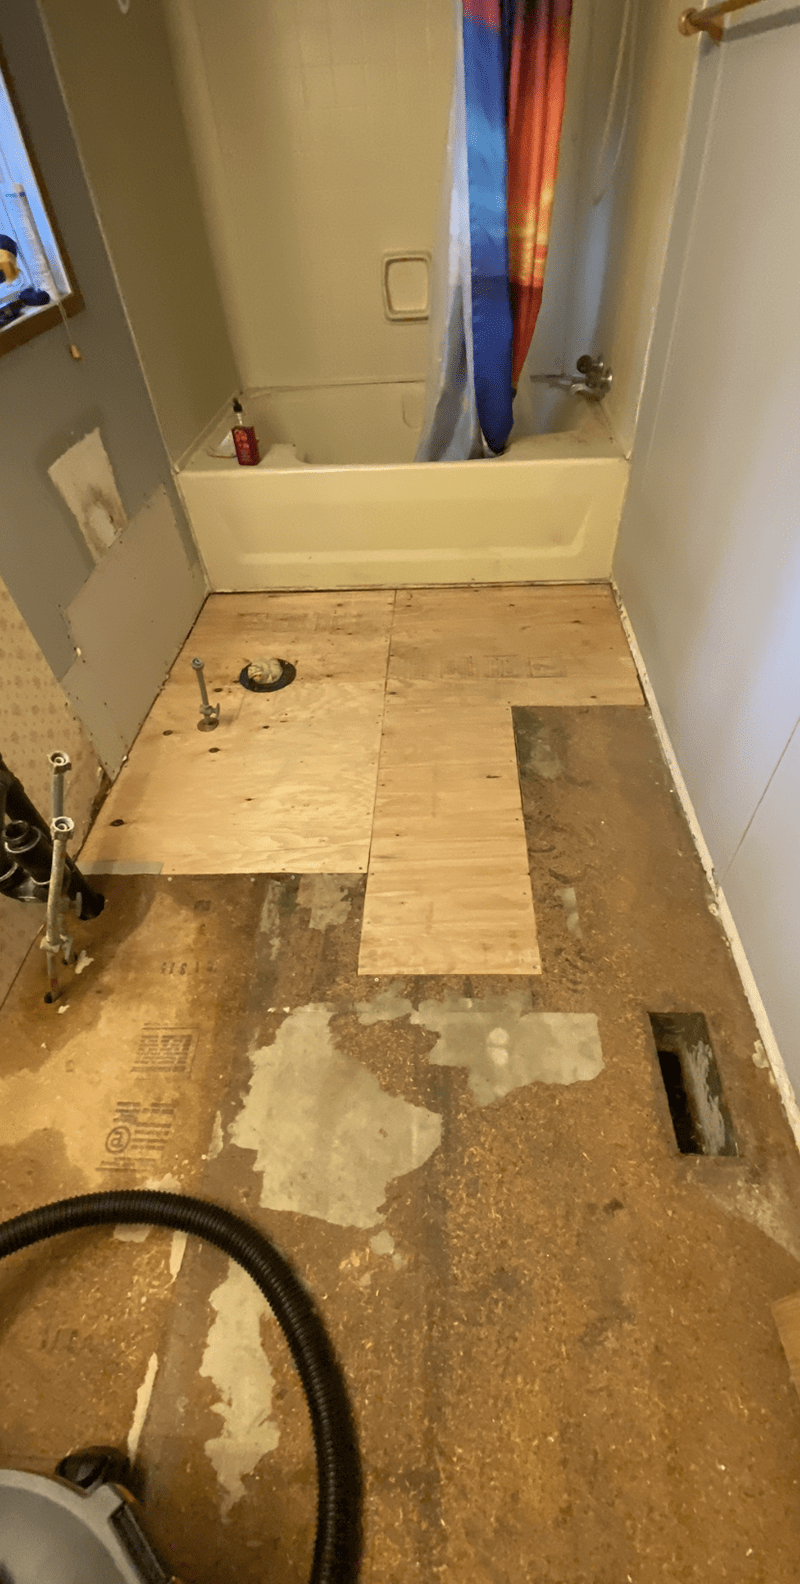 Bathroom Plumbing and flooring